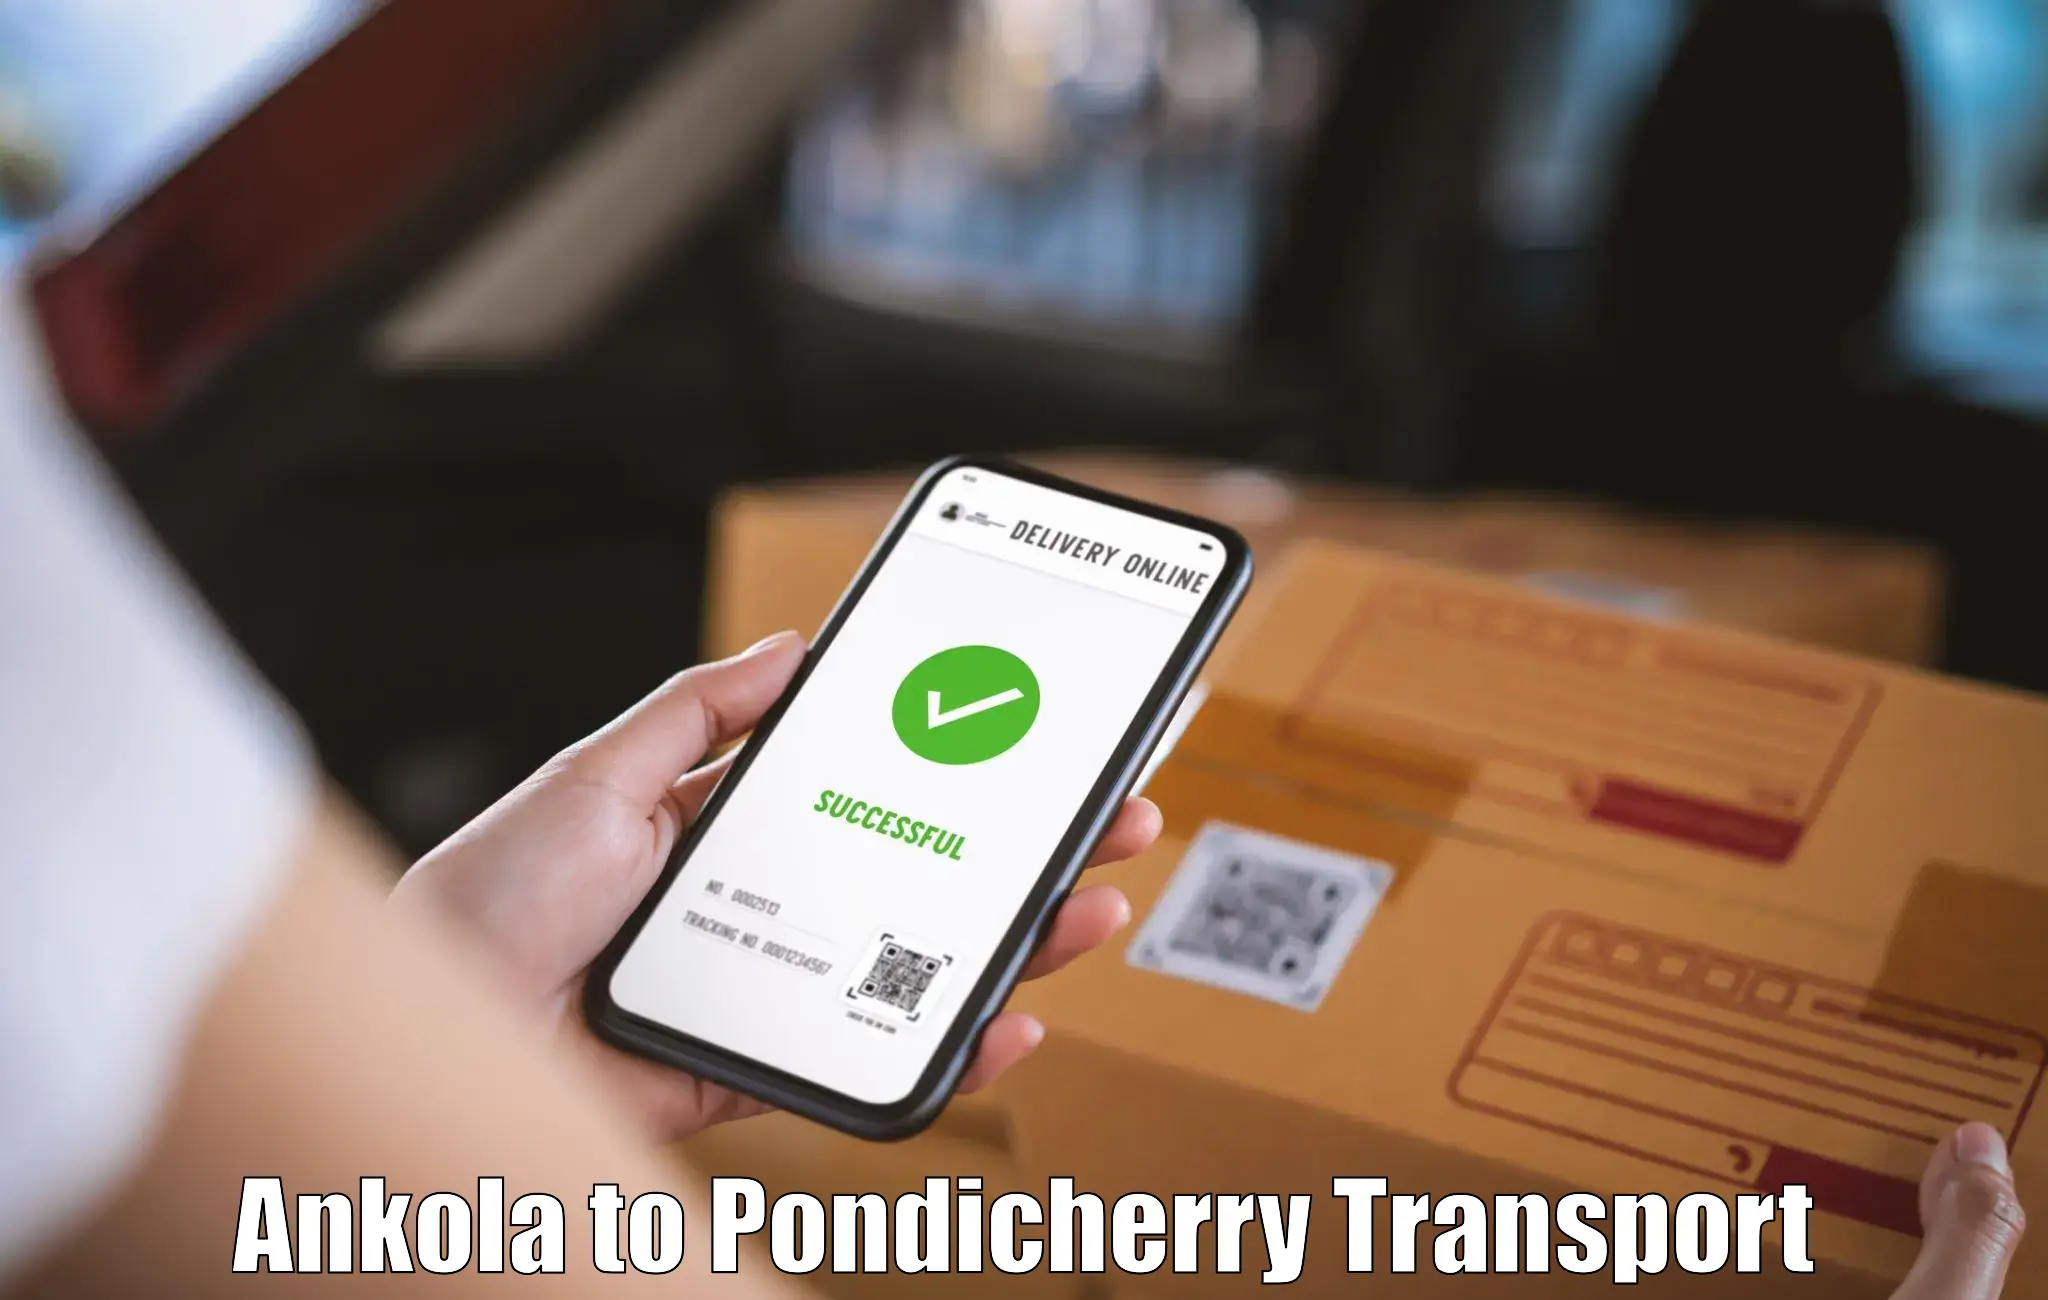 Delivery service Ankola to Pondicherry